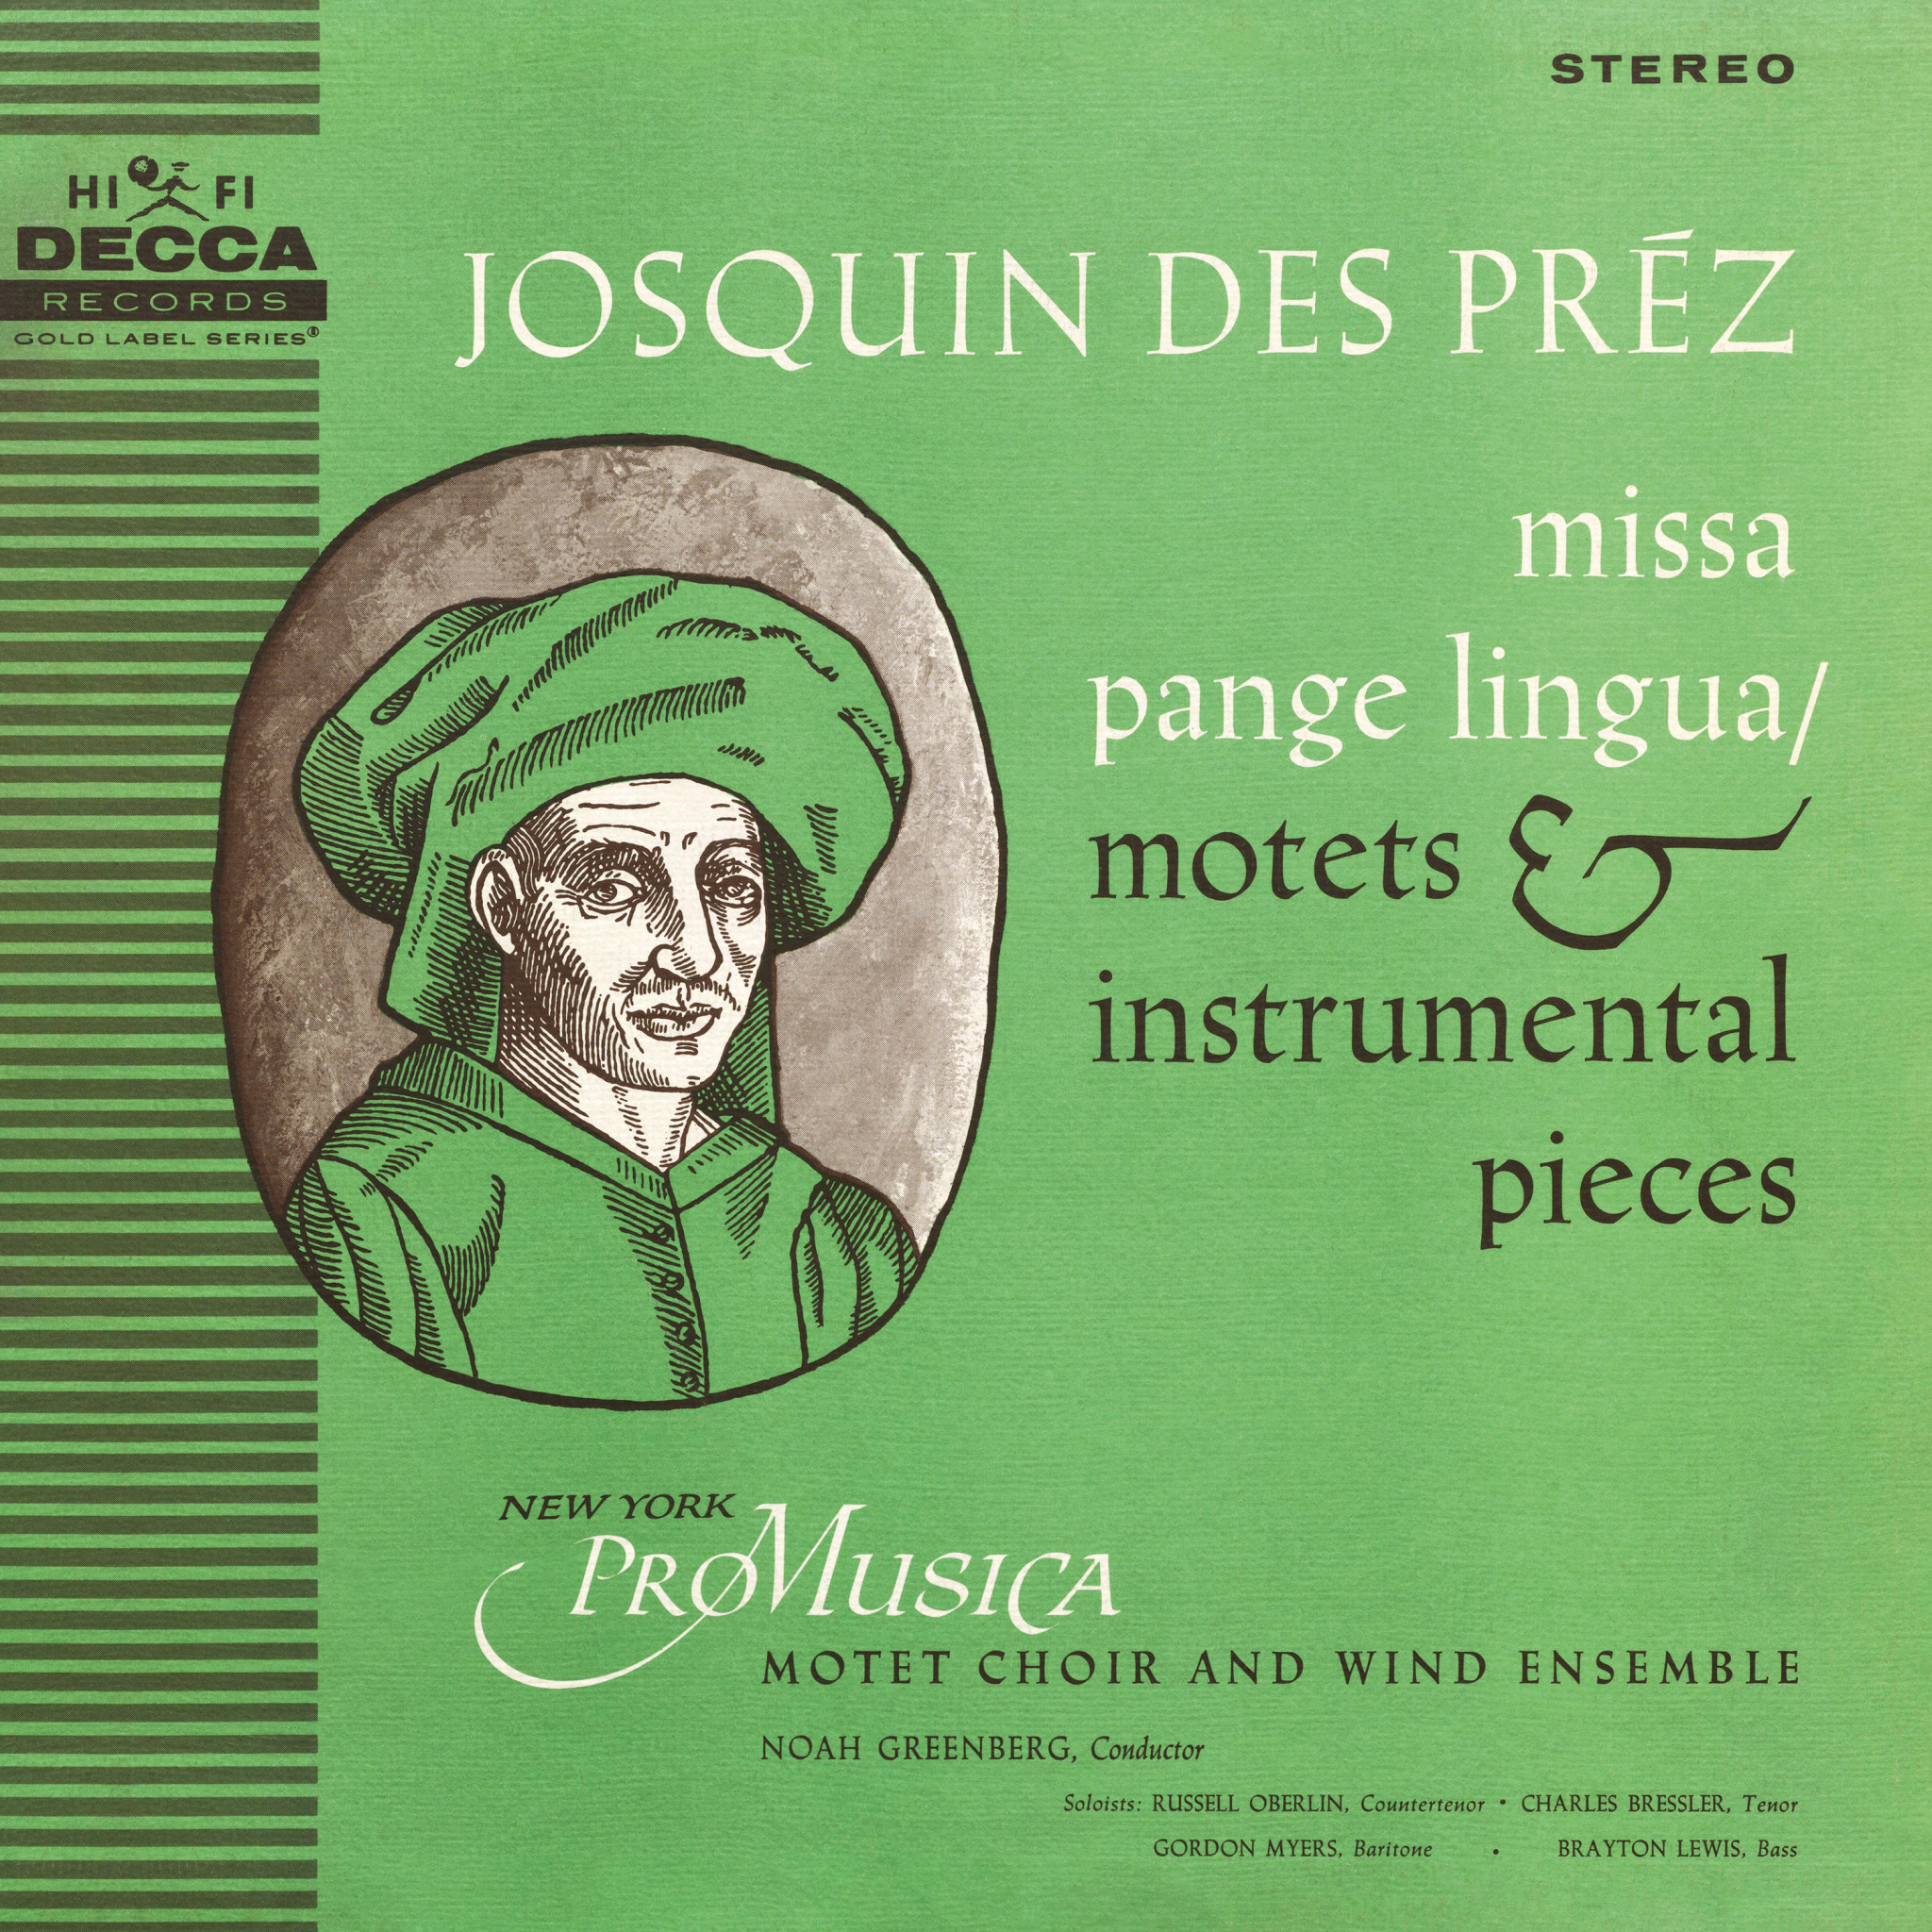 Russell Oberlin - Des Prez: Missa Pange Lingua / Motets & Instrumental Pieces